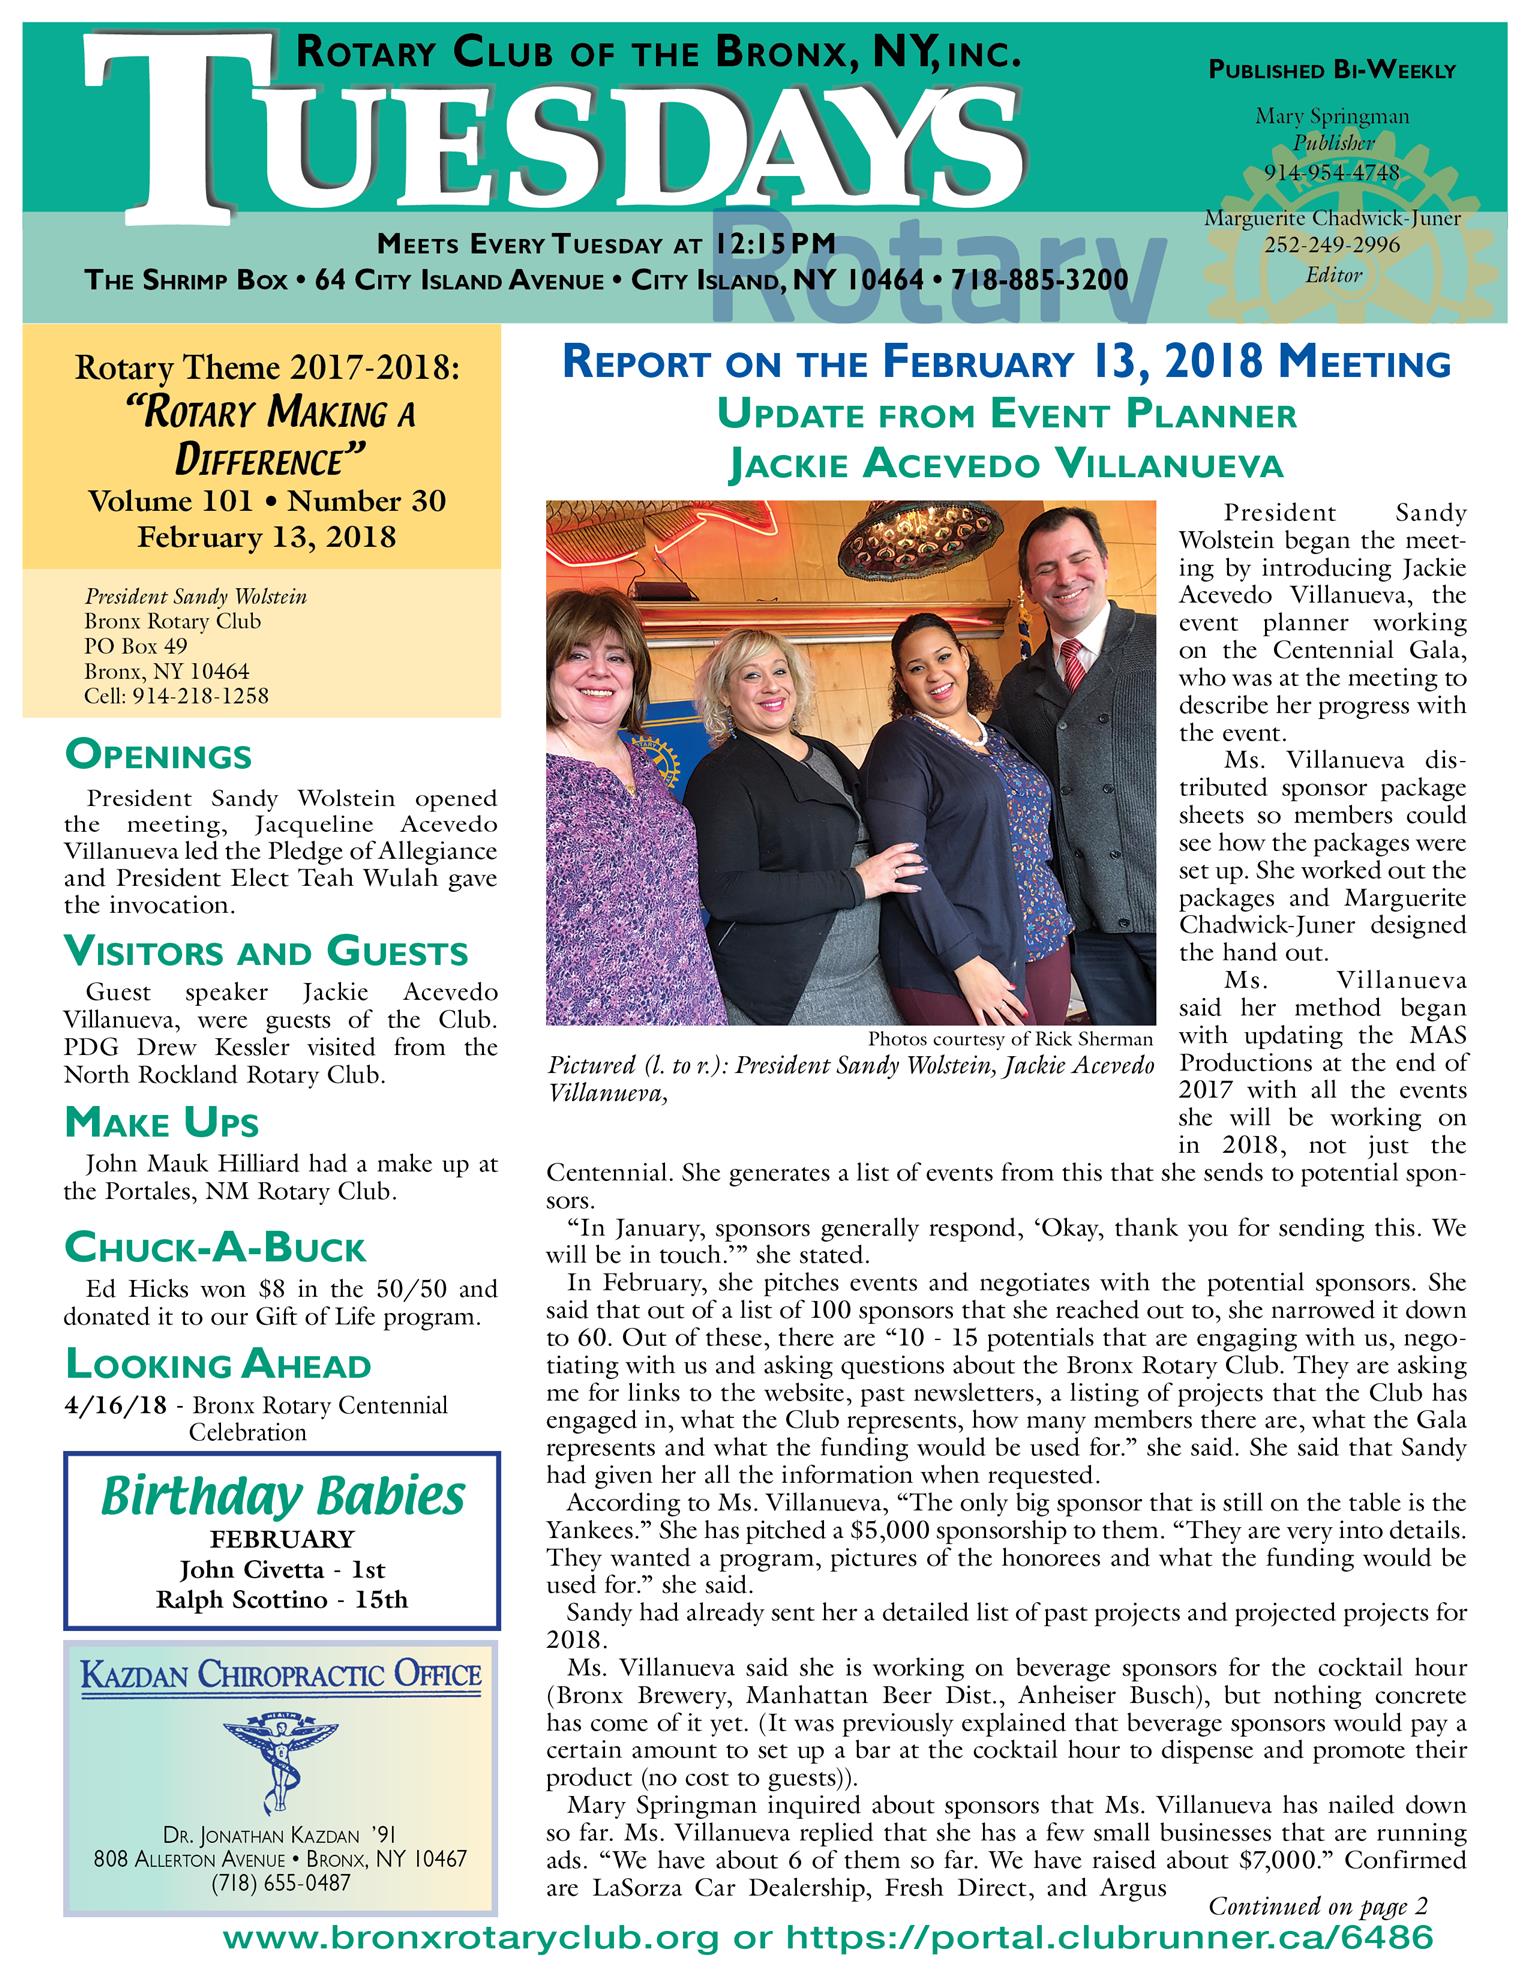 Tuesdays Newsletter 2/13-3/6/18 p1